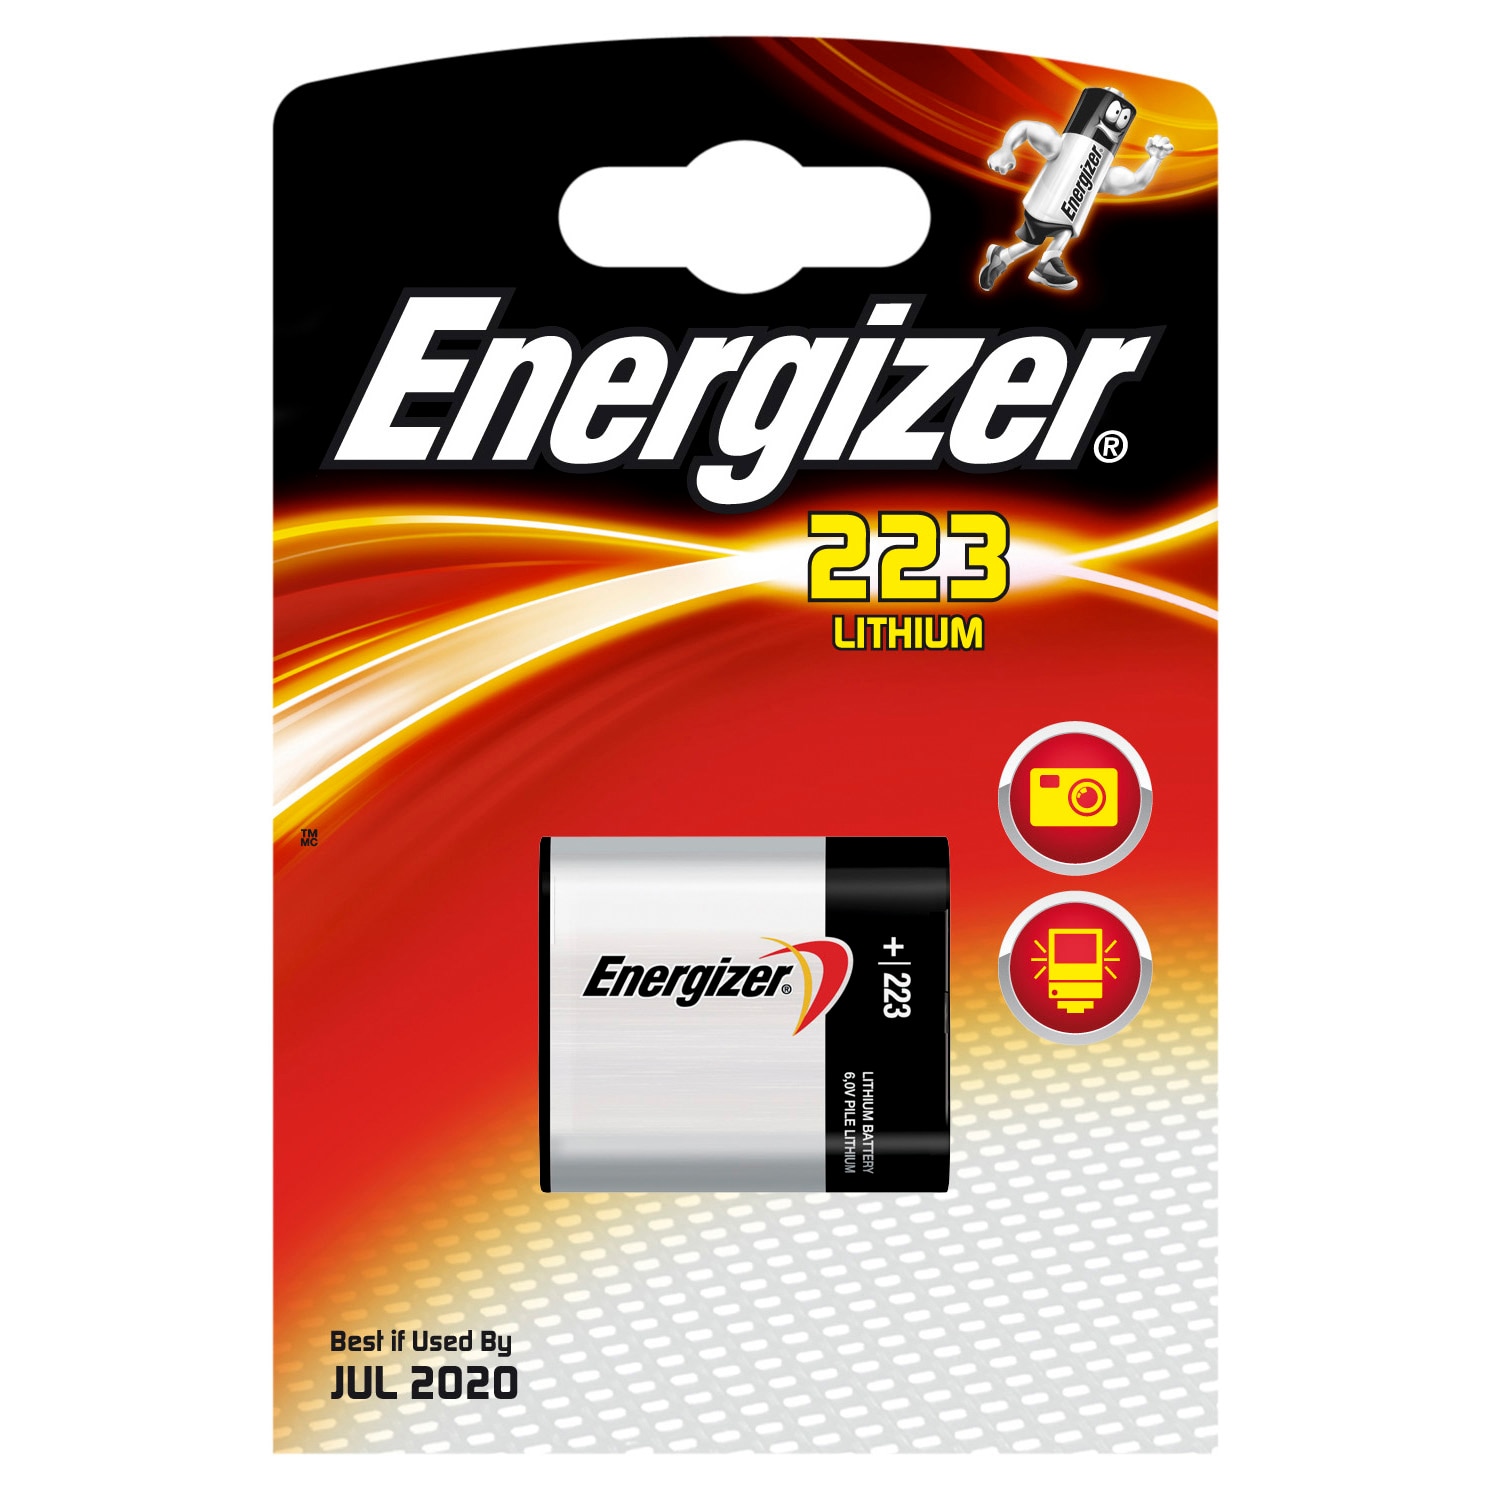 Energizer Photo batteri 223 thumbnail